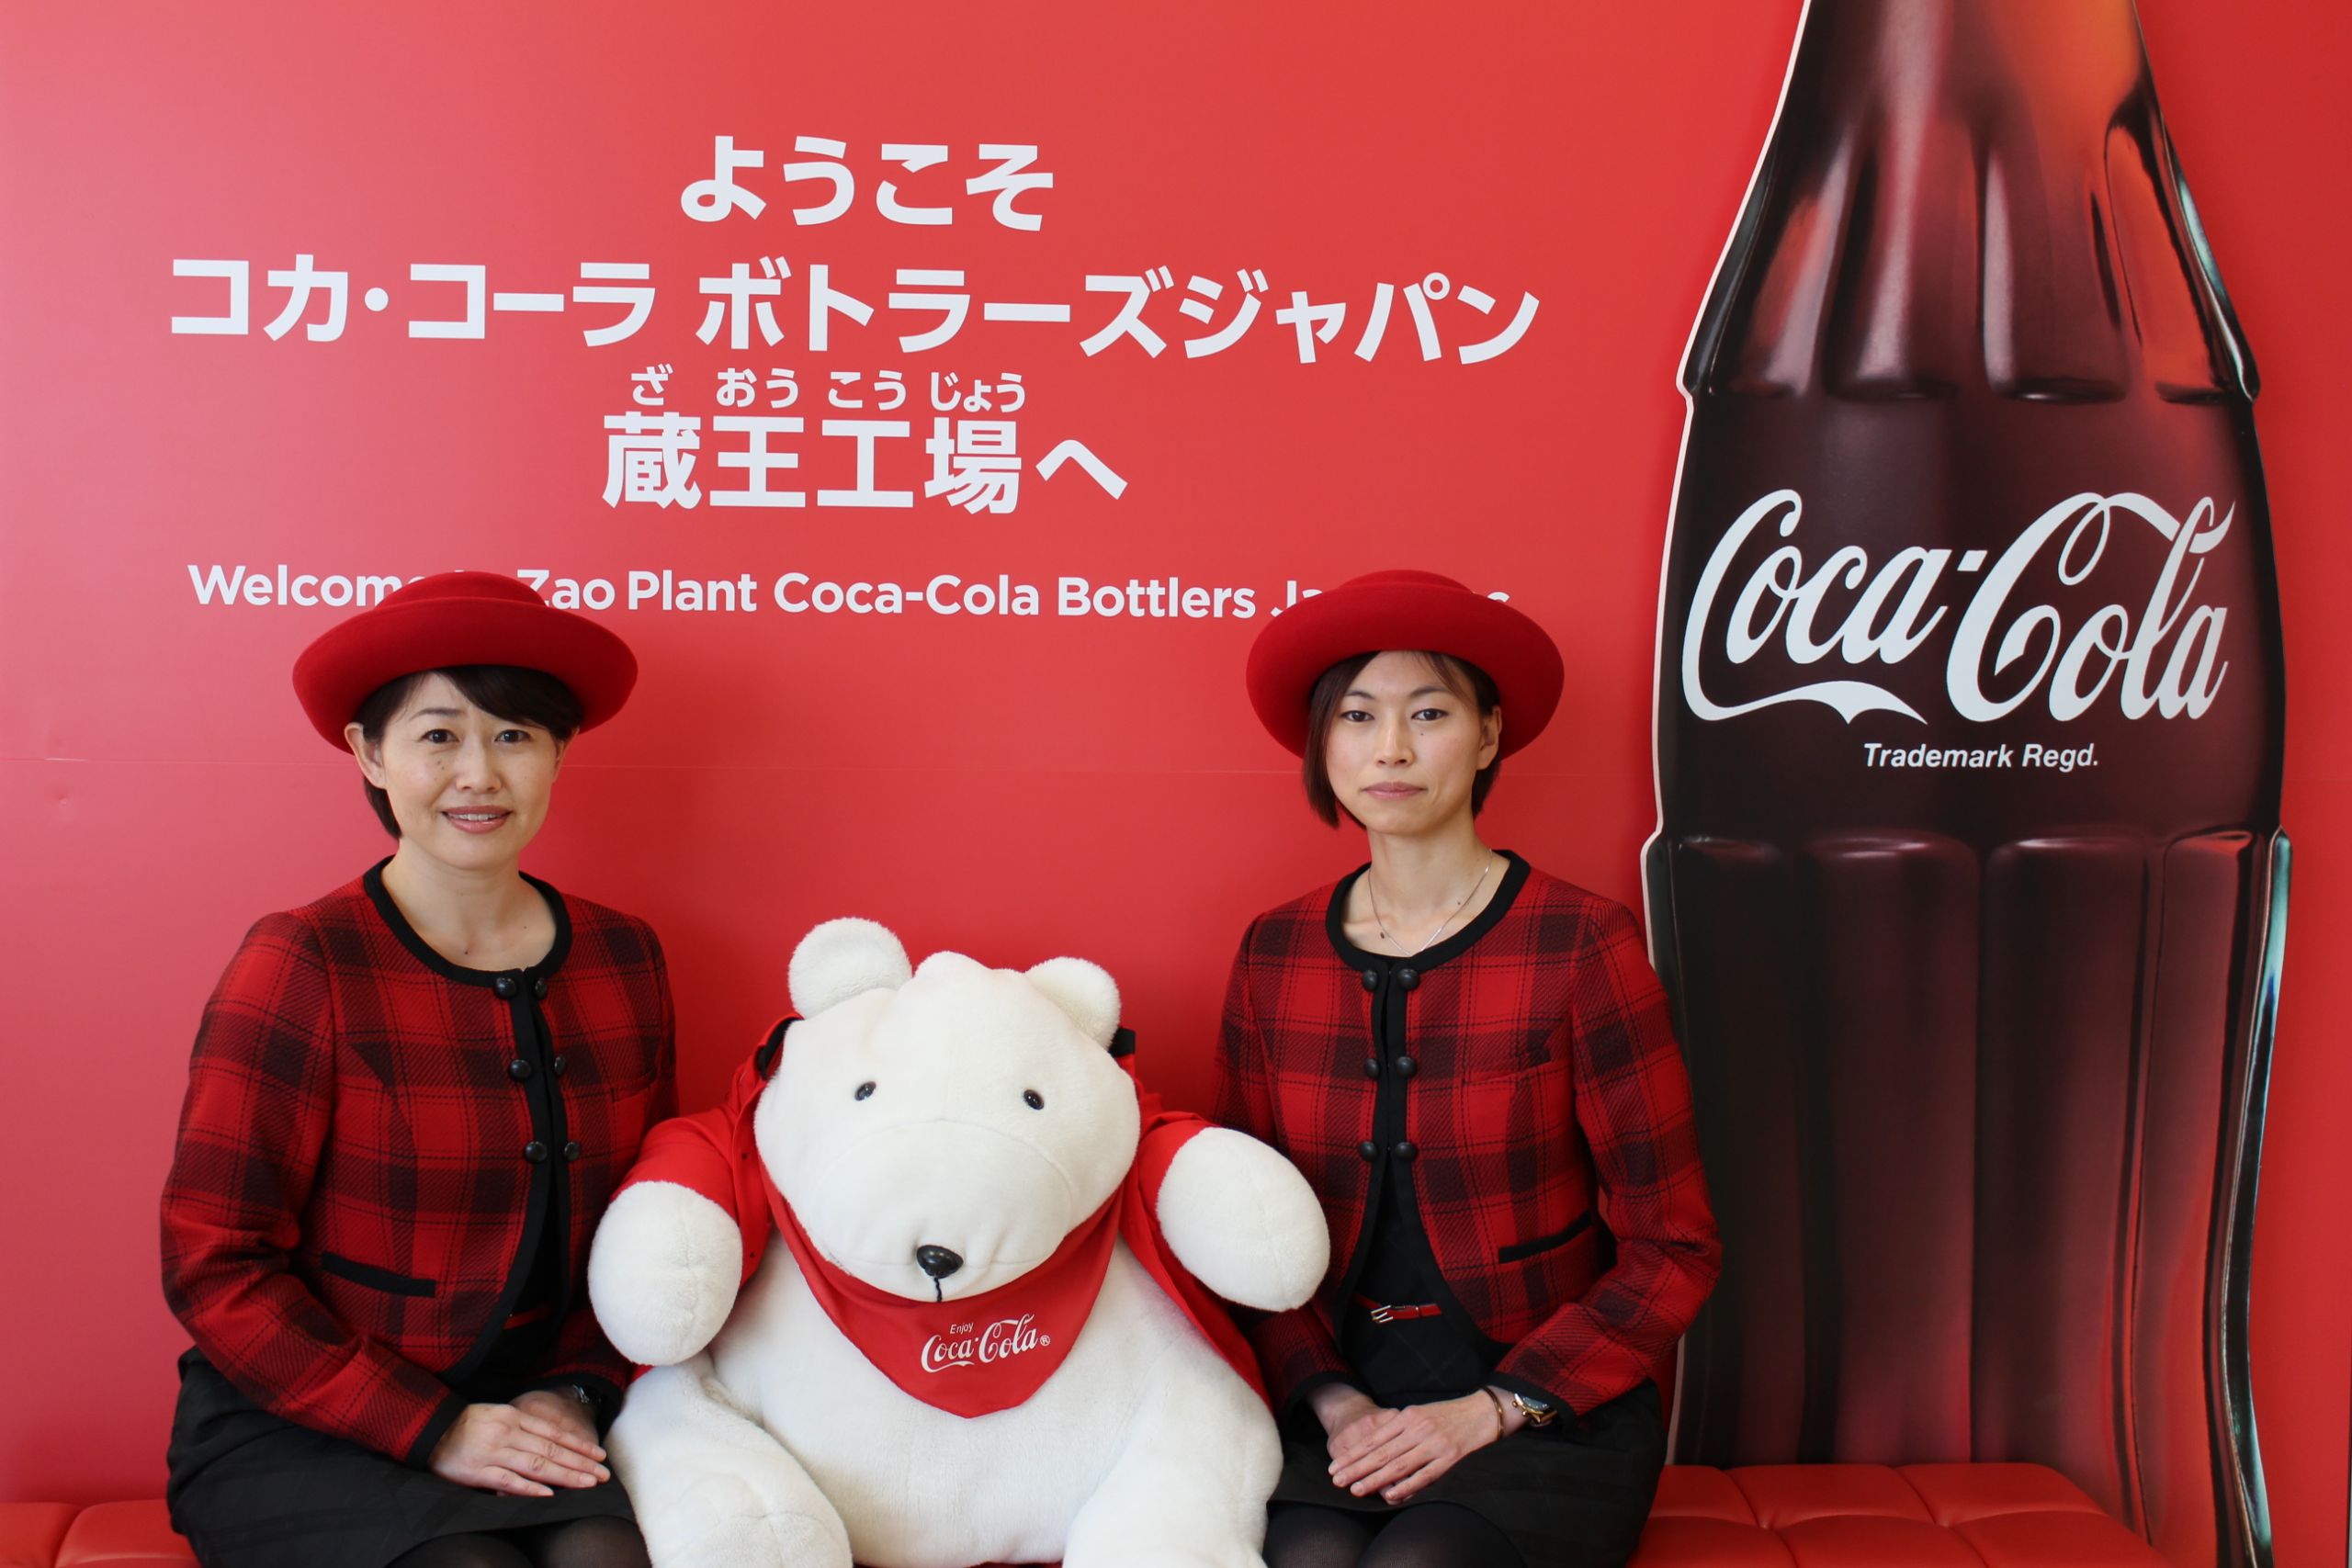 Coca-Cola Botters Japan Zao Factory Visit